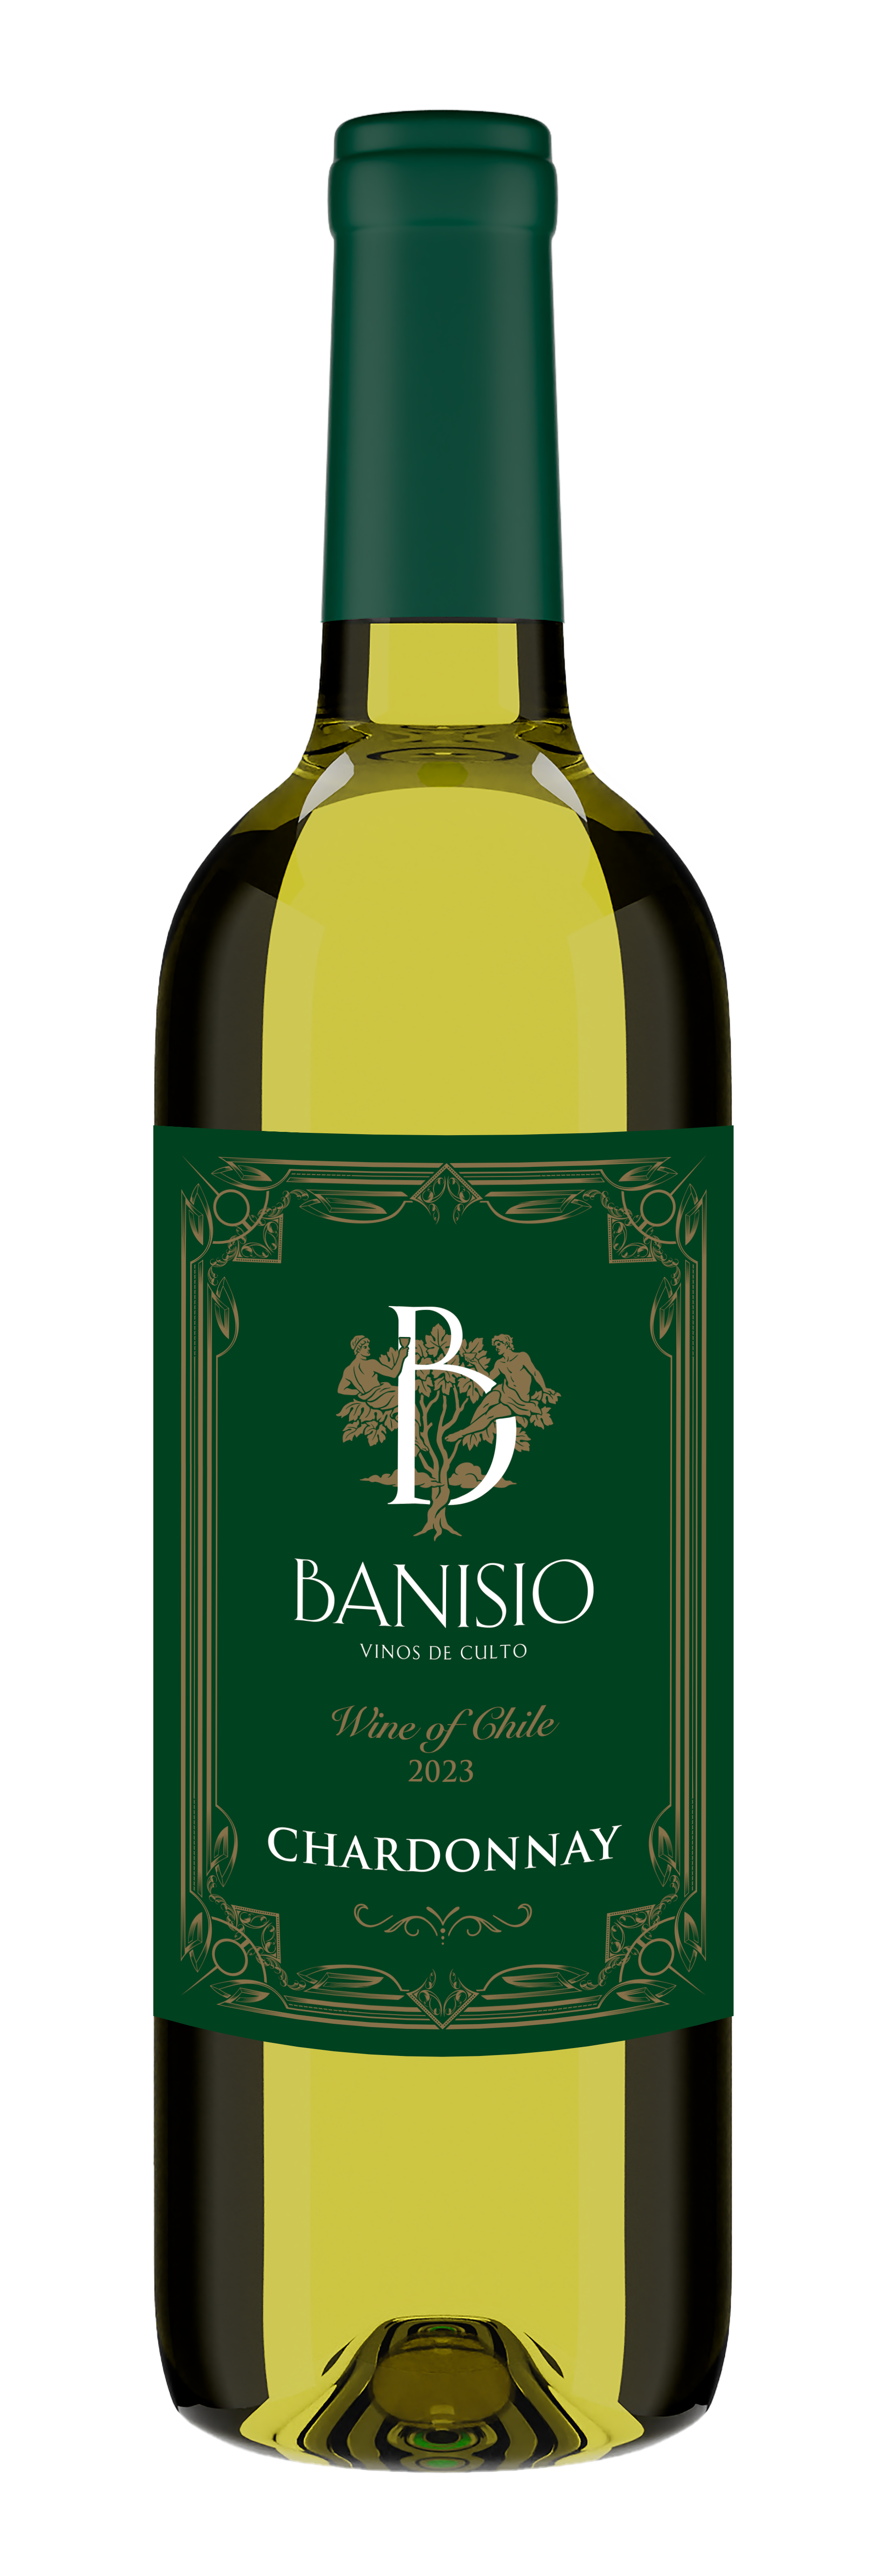 Wine from Chile – Chardonnay – Banisio.